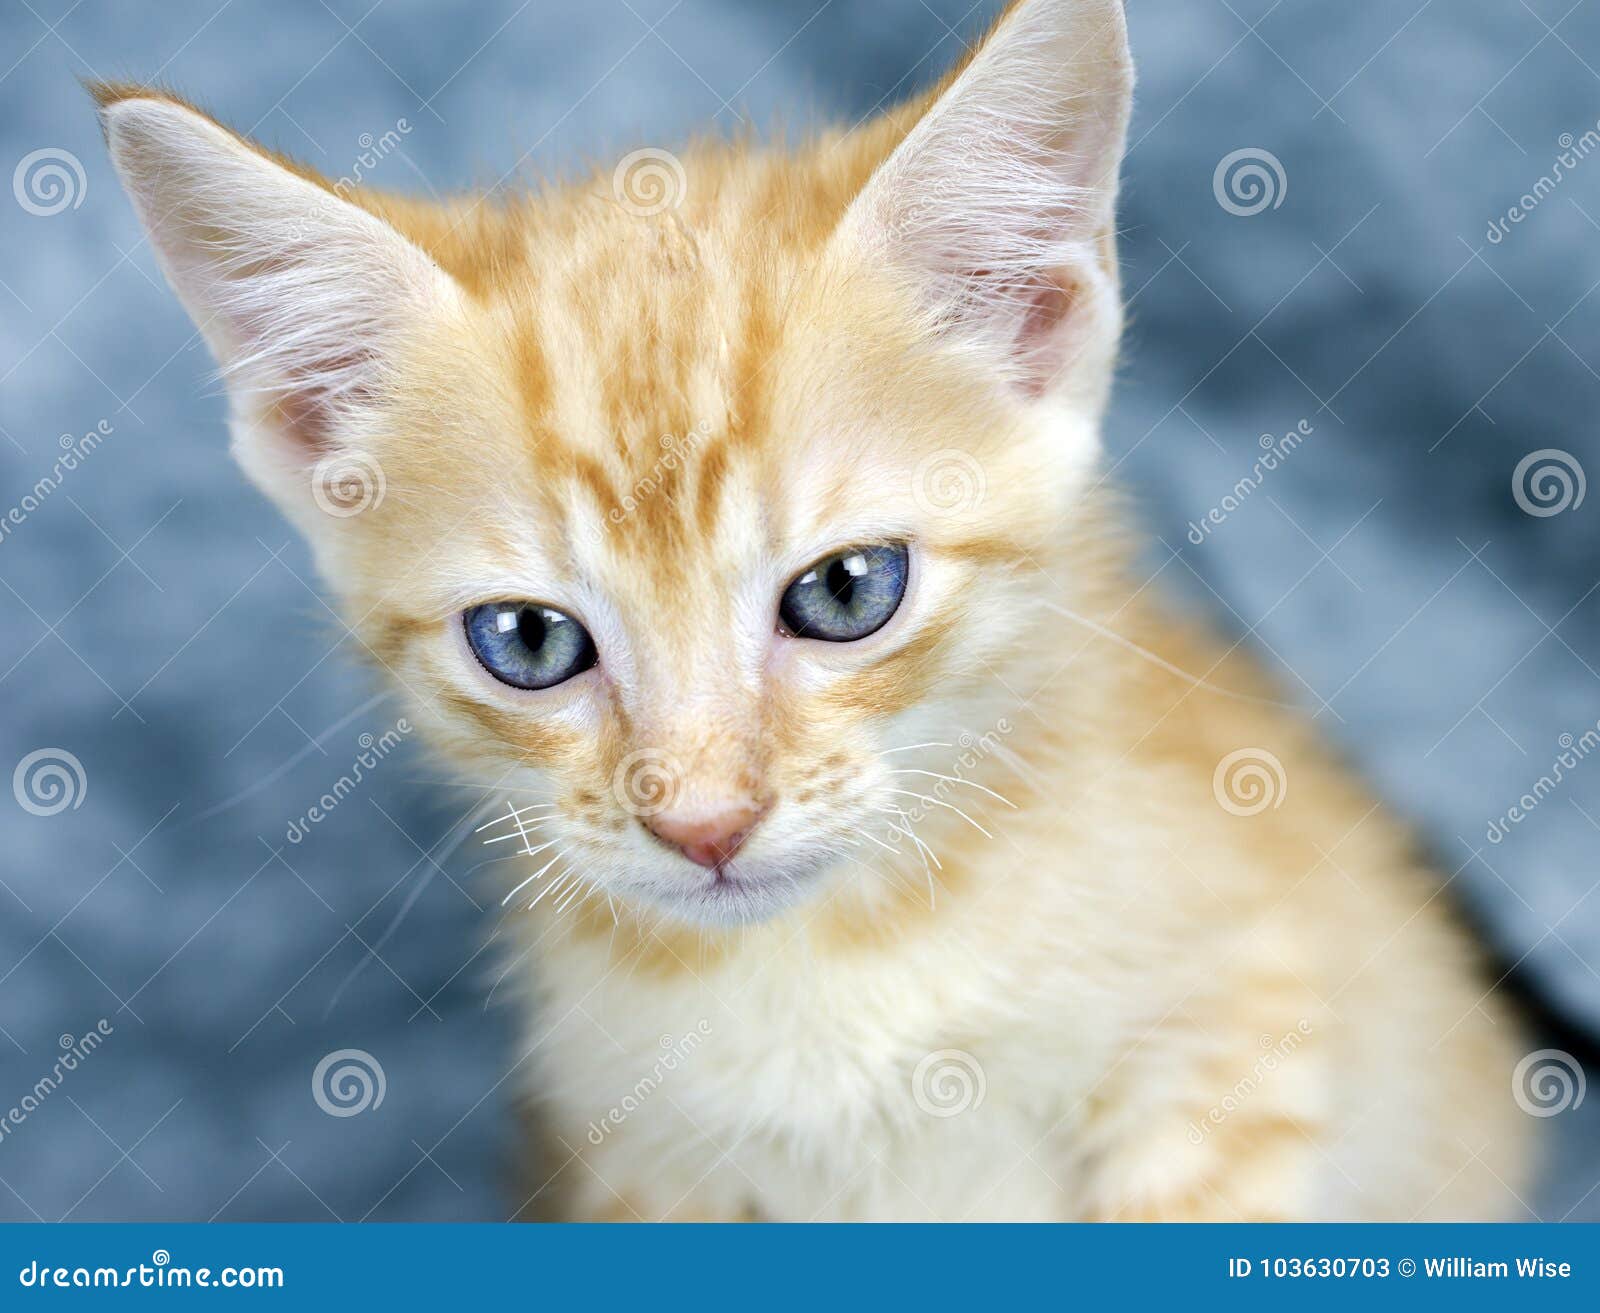 Orange Kitten With Blue Eyes Stock Image - Image of male ...